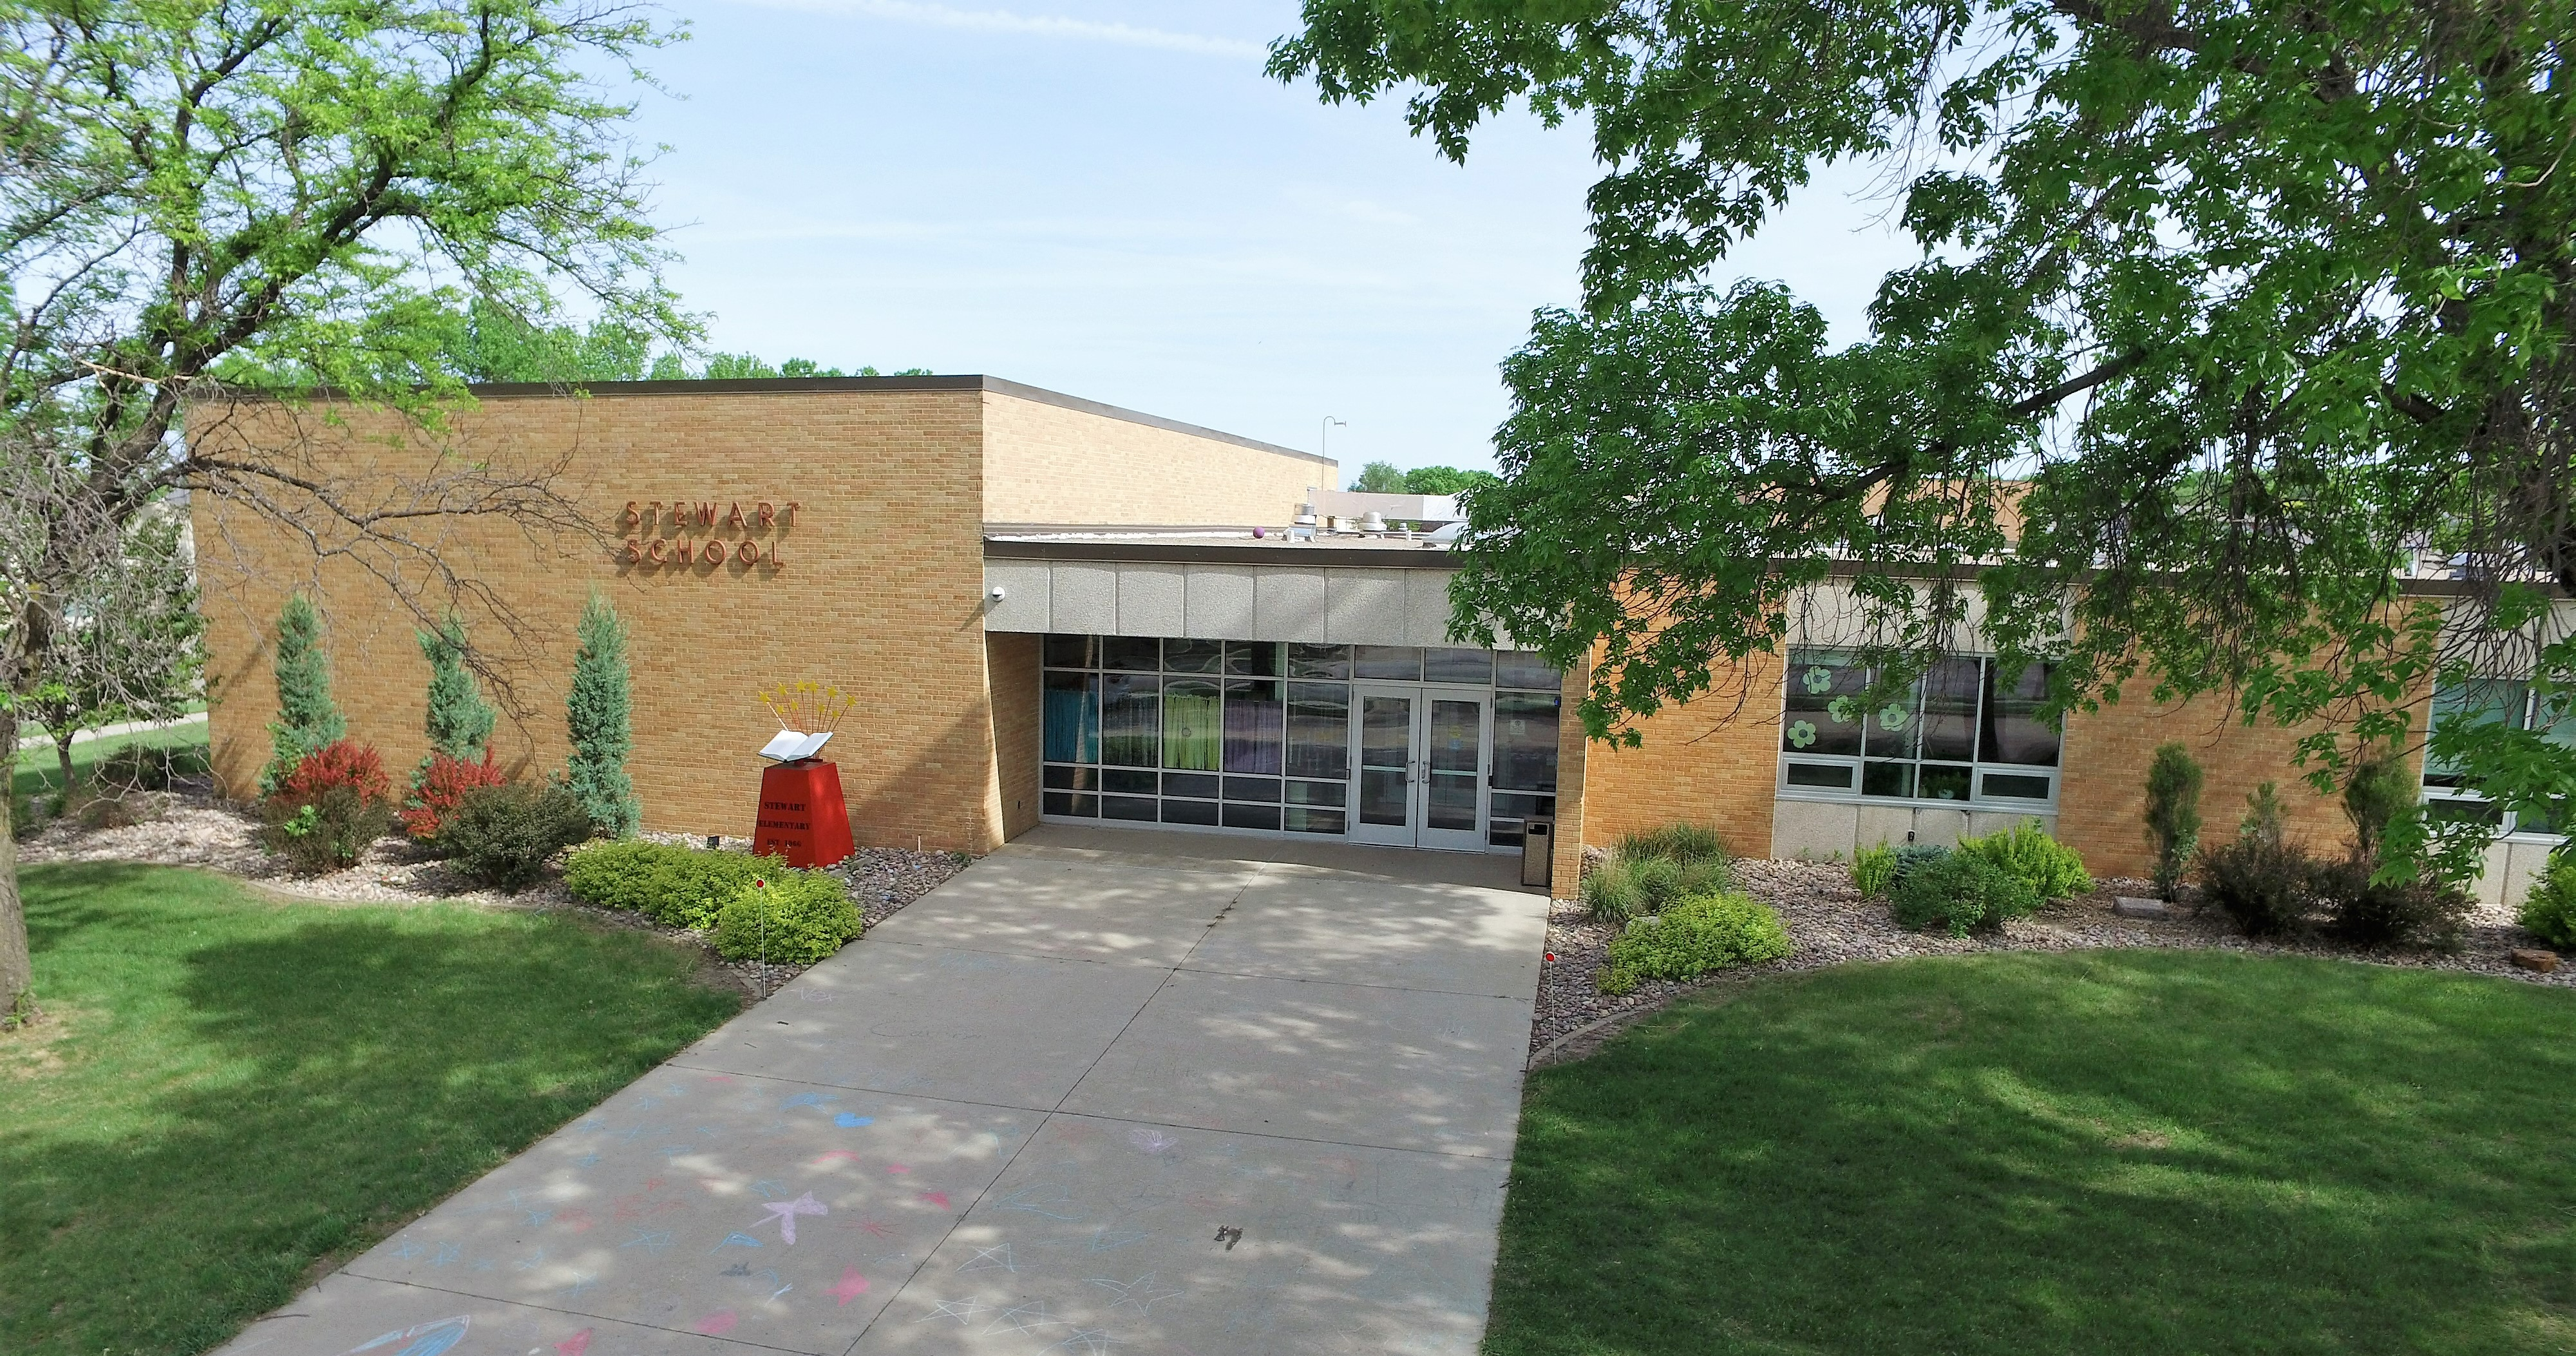 Stewart Elementary School Building